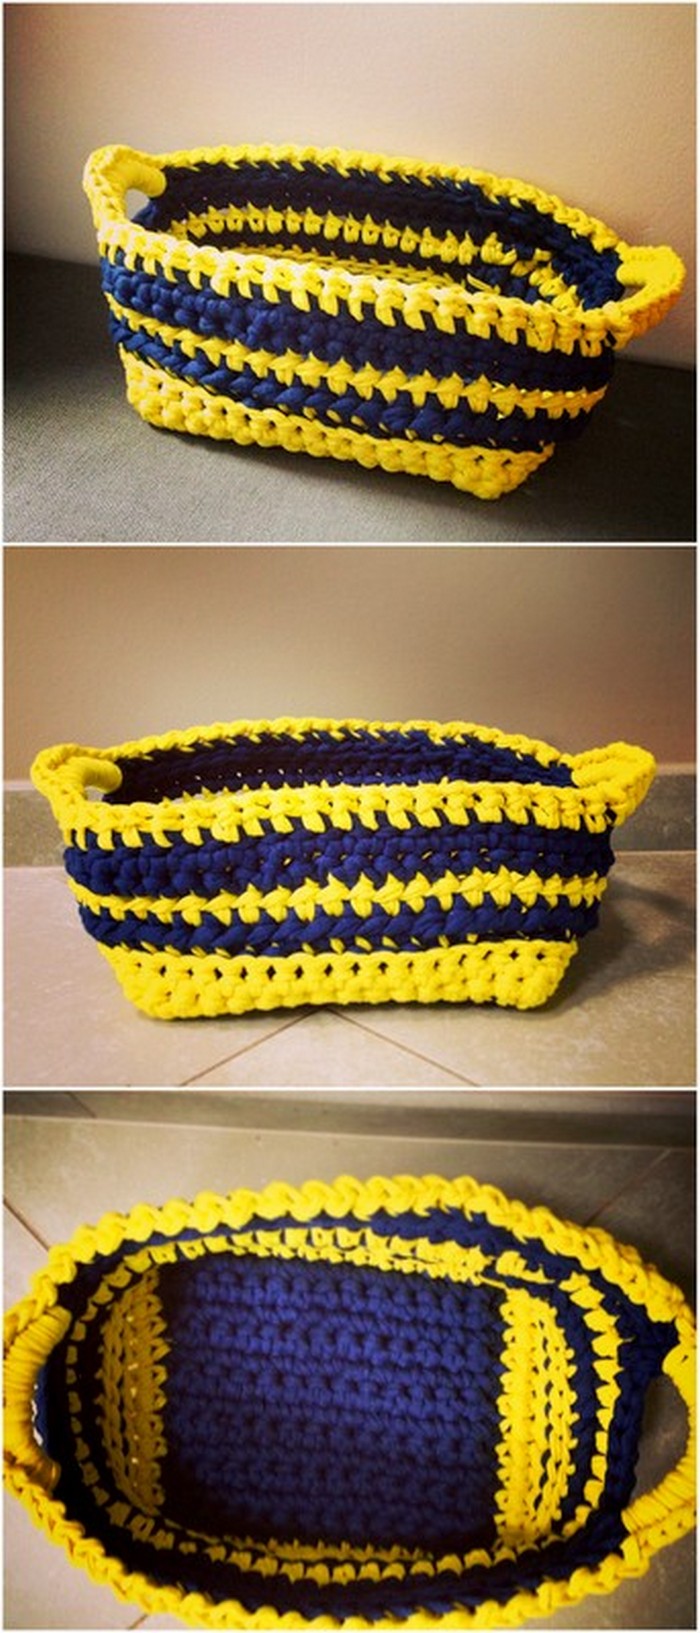 adorable crochet basket idea